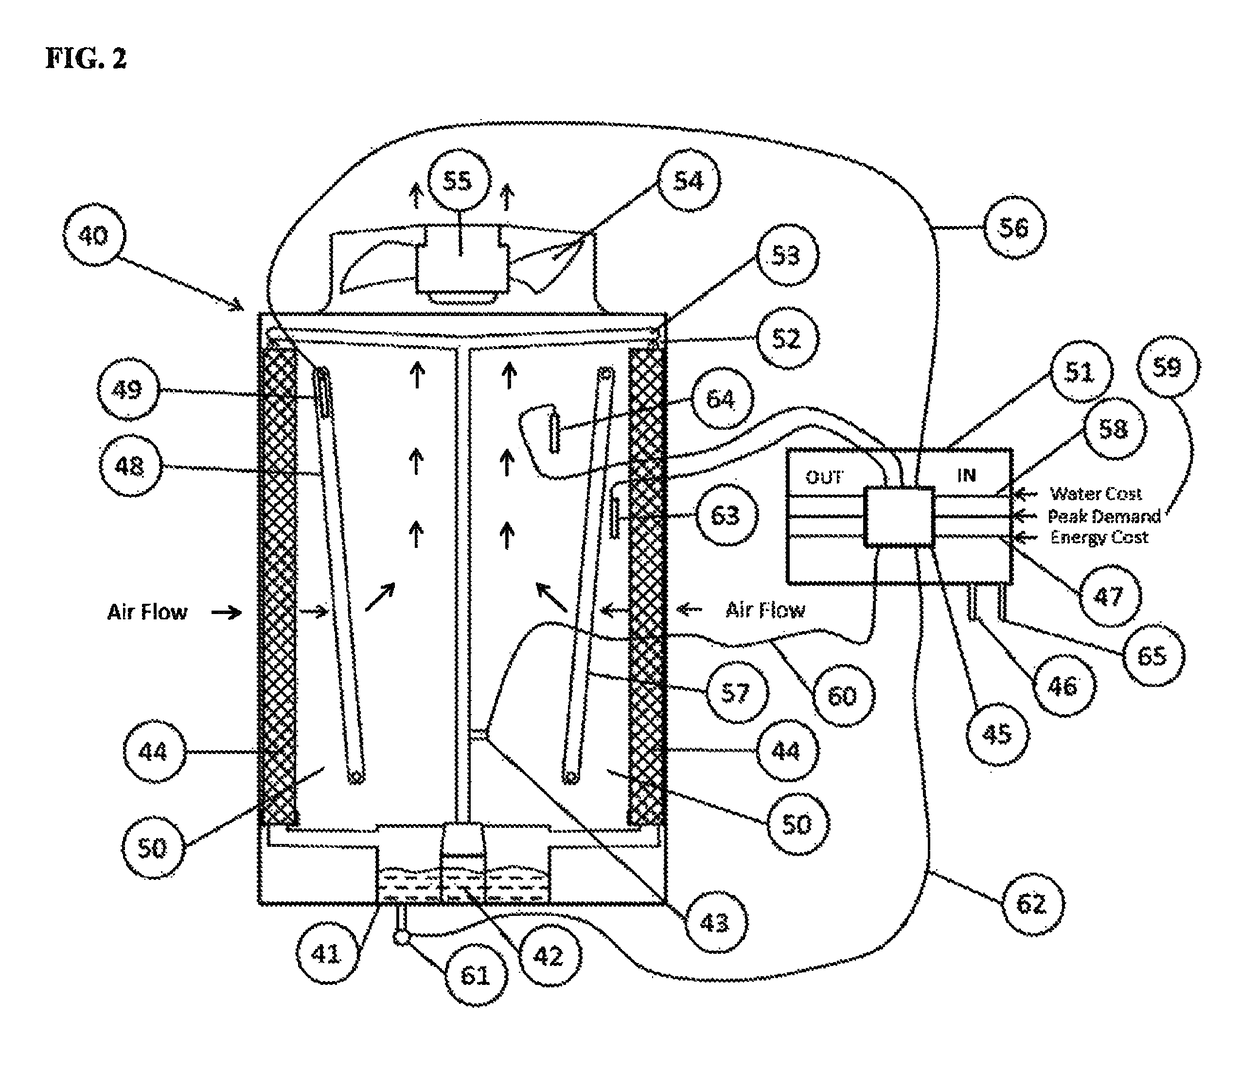 Adiabatic refrigerant condenser controls system